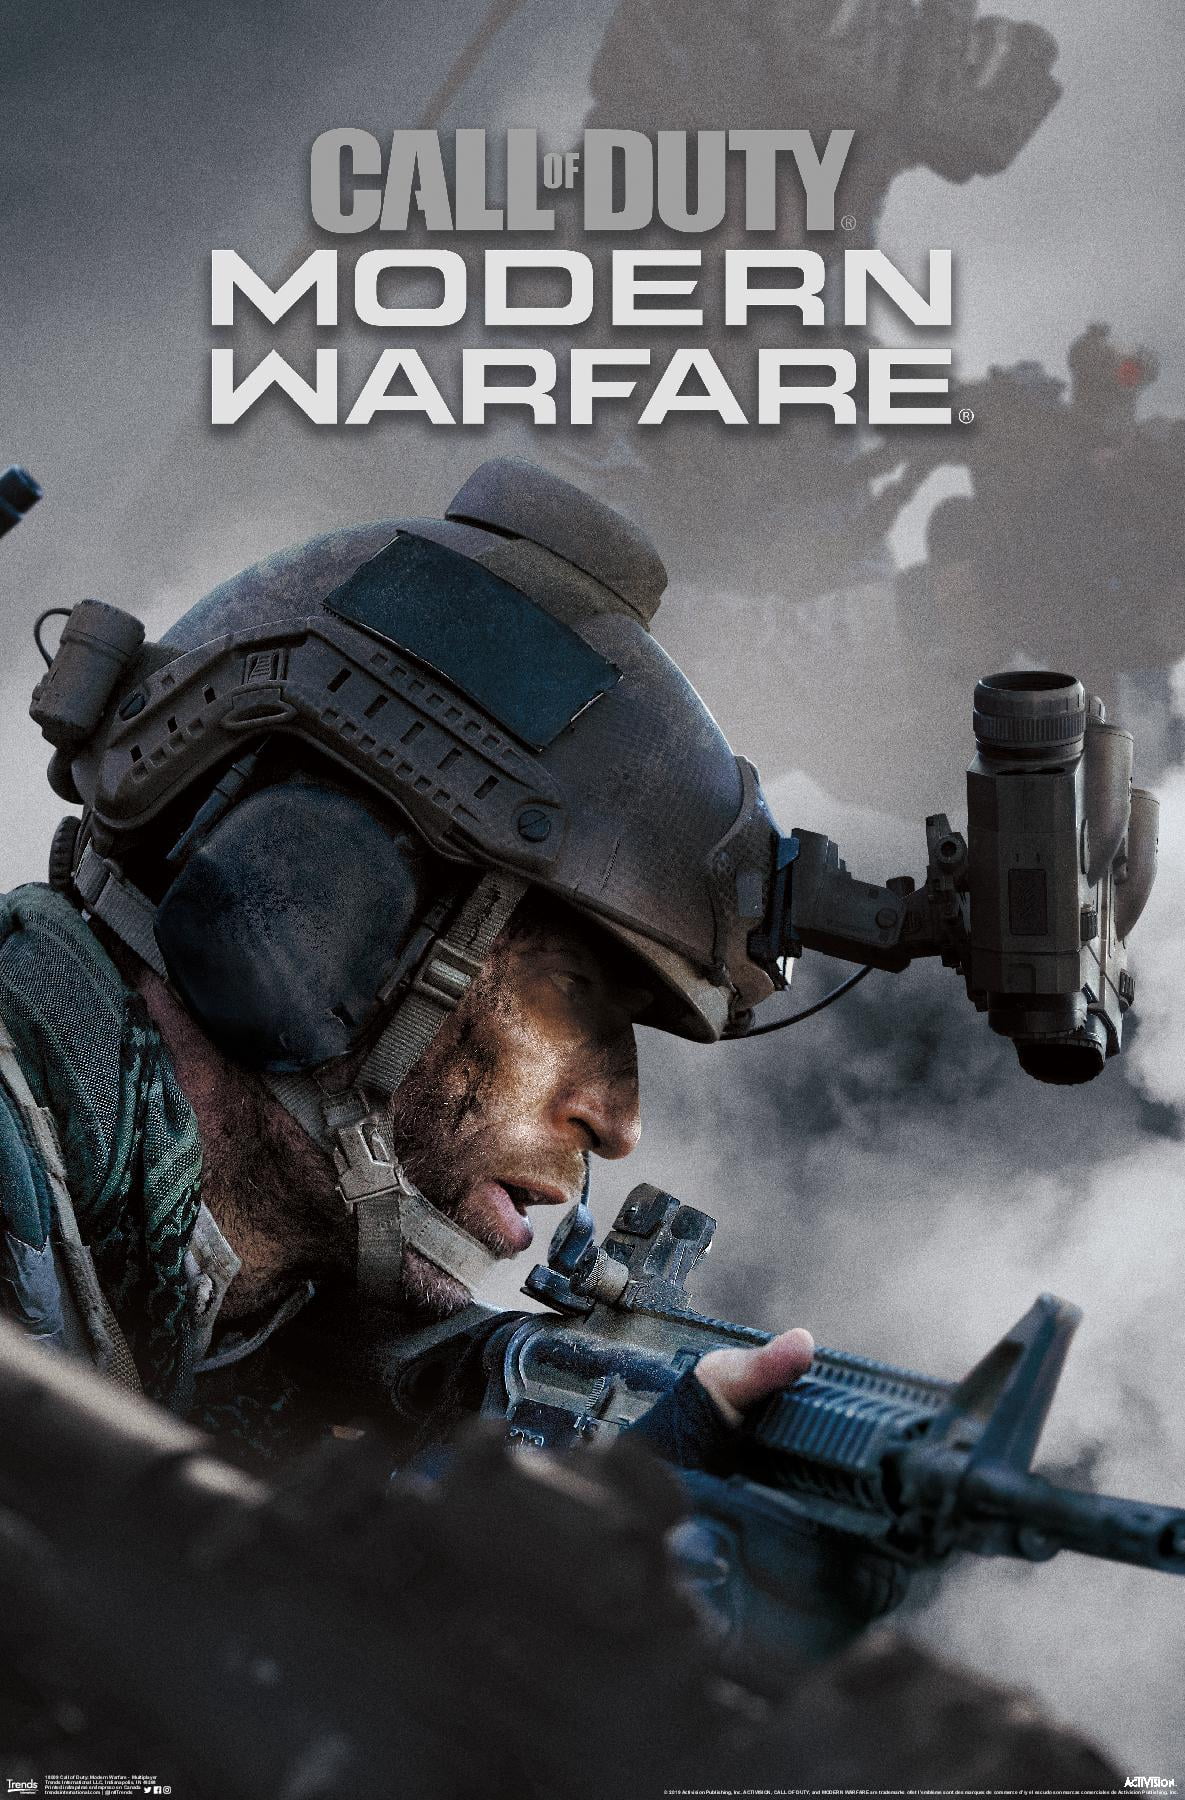 Call of Duty: Modern Warfare - Multiplayer Wall Poster, 22.375\